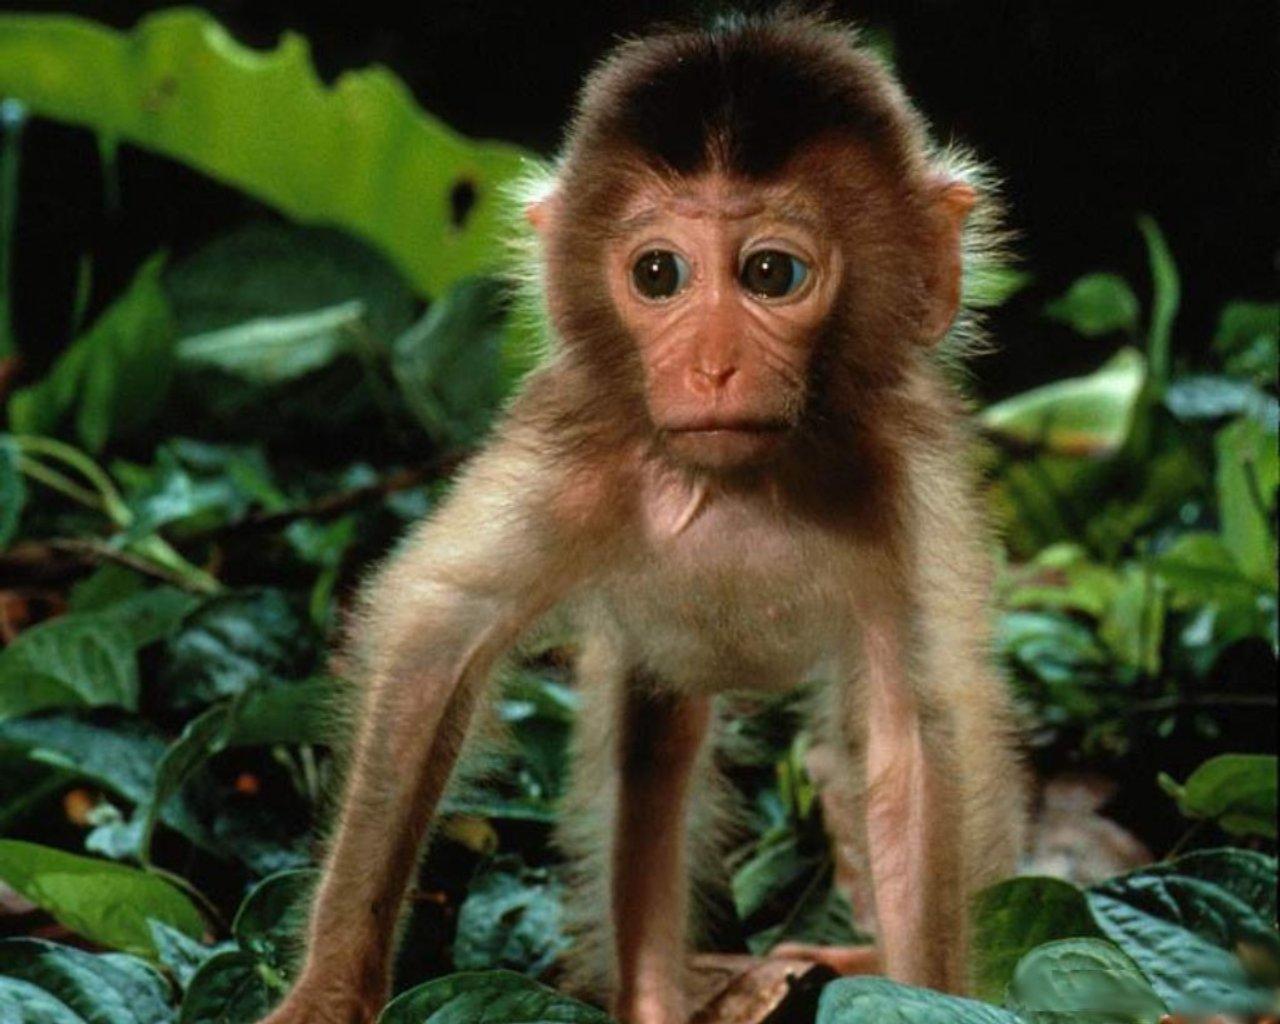 Unique Animals blogs: Baby Monkey Wallpaper, Monkey Baby Funny